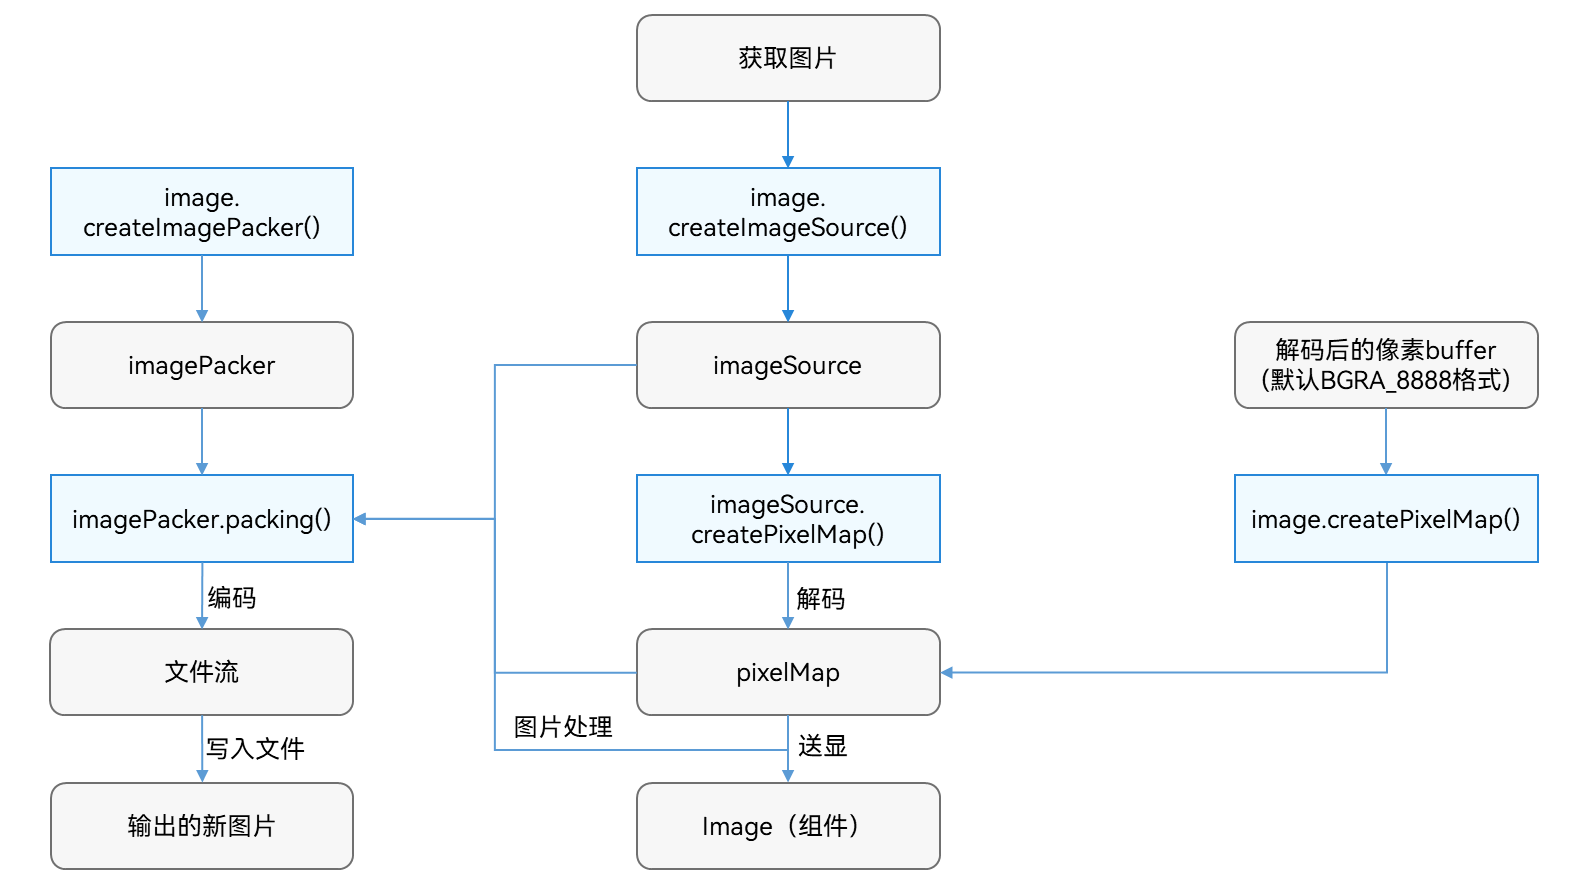 Image development process